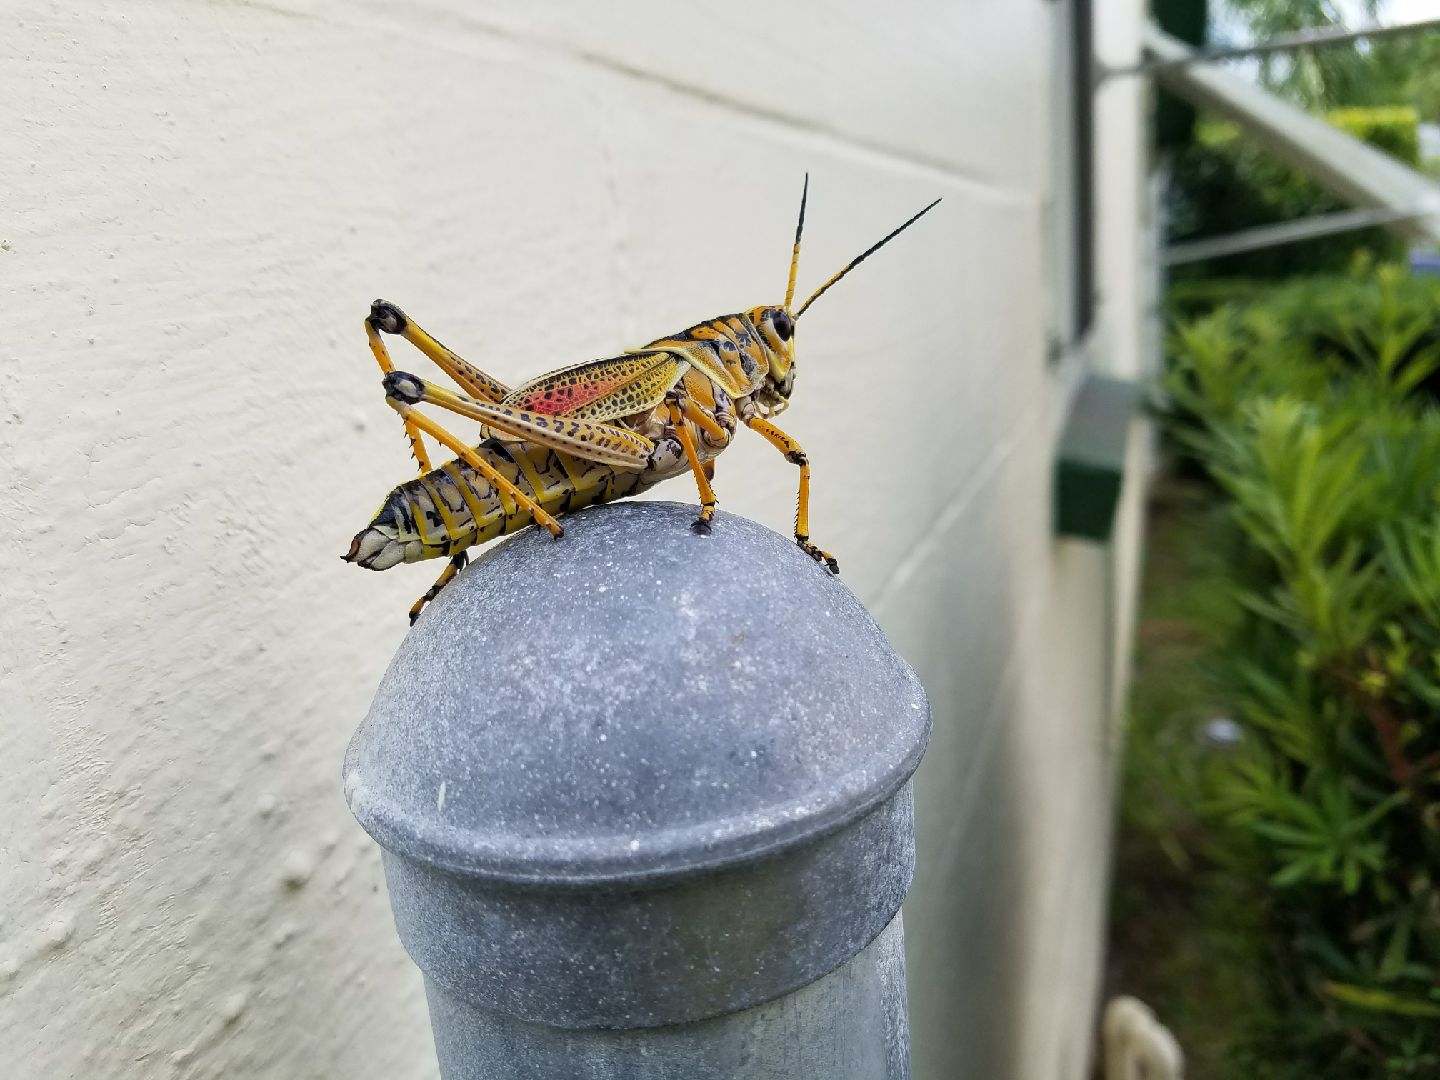 Lubber Grasshoppers don't bite, they do spit & secrete foul